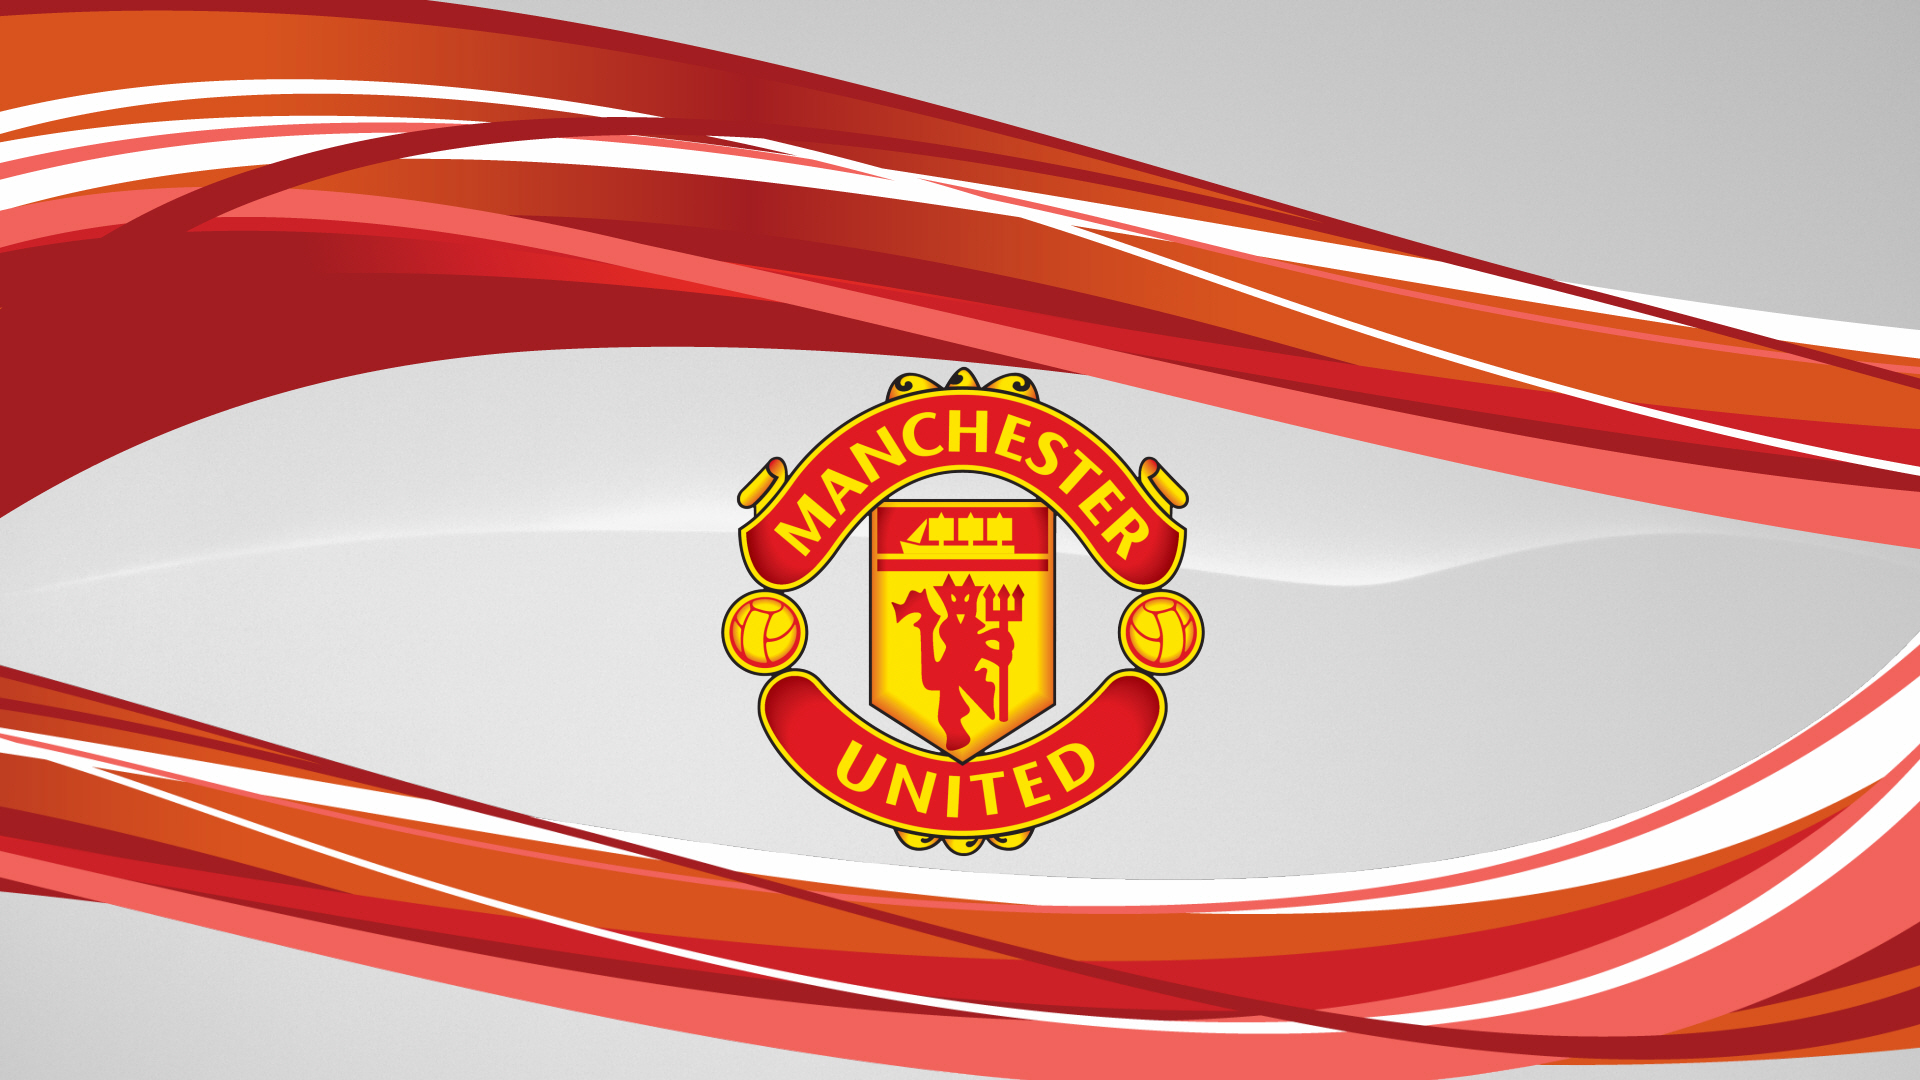 Manchester United football logo wallpaper | Wallpapers.ai